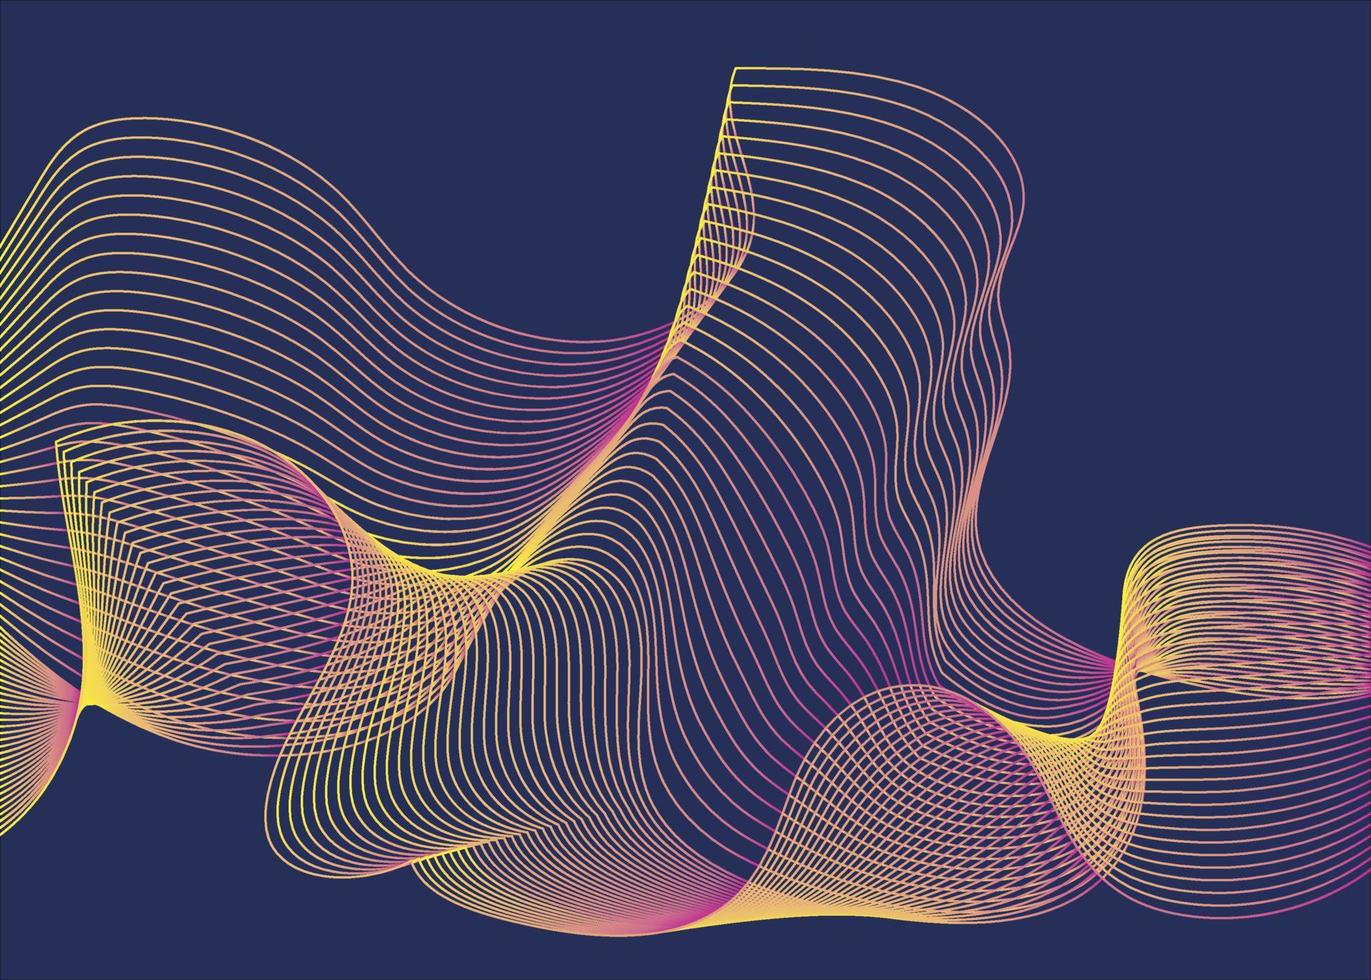 Neon wave lines with gradient on dark background. Dynamic sound wave. Optical art design element. Vector background.